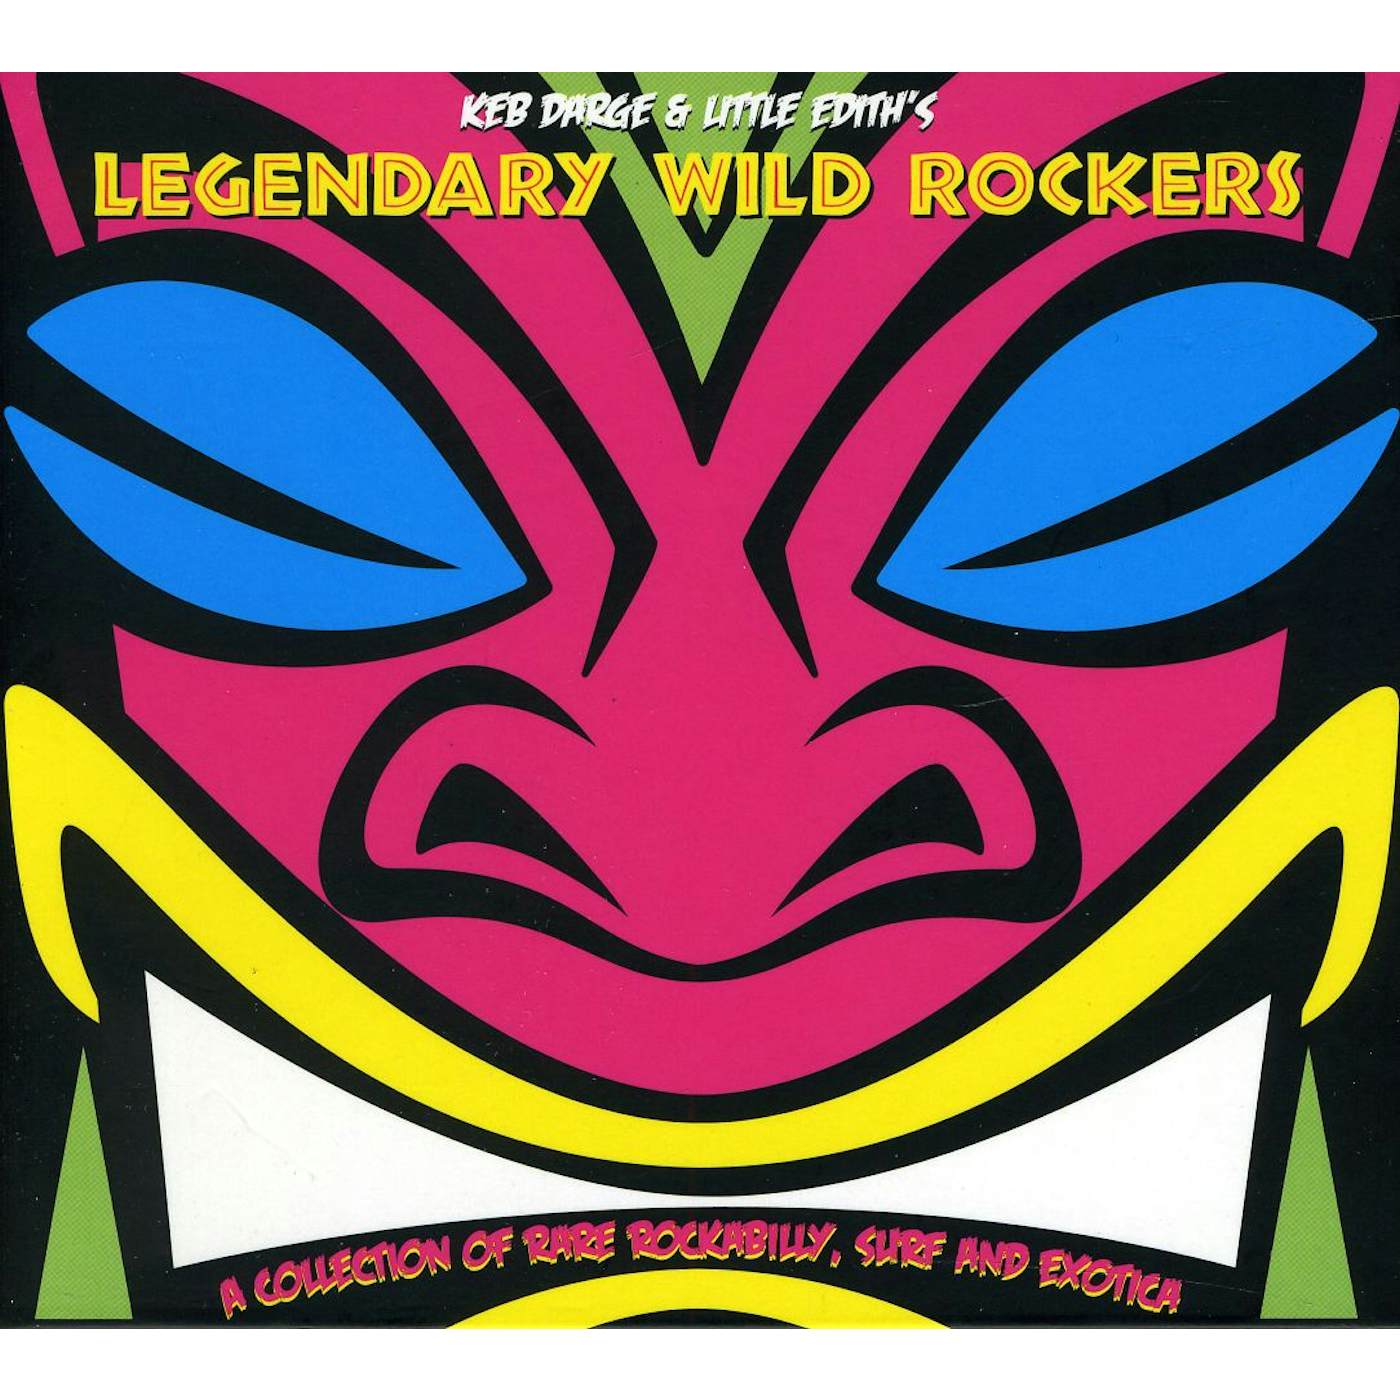 Keb Darge & Little Ediths LEGENDARY WILD ROCKERS CD